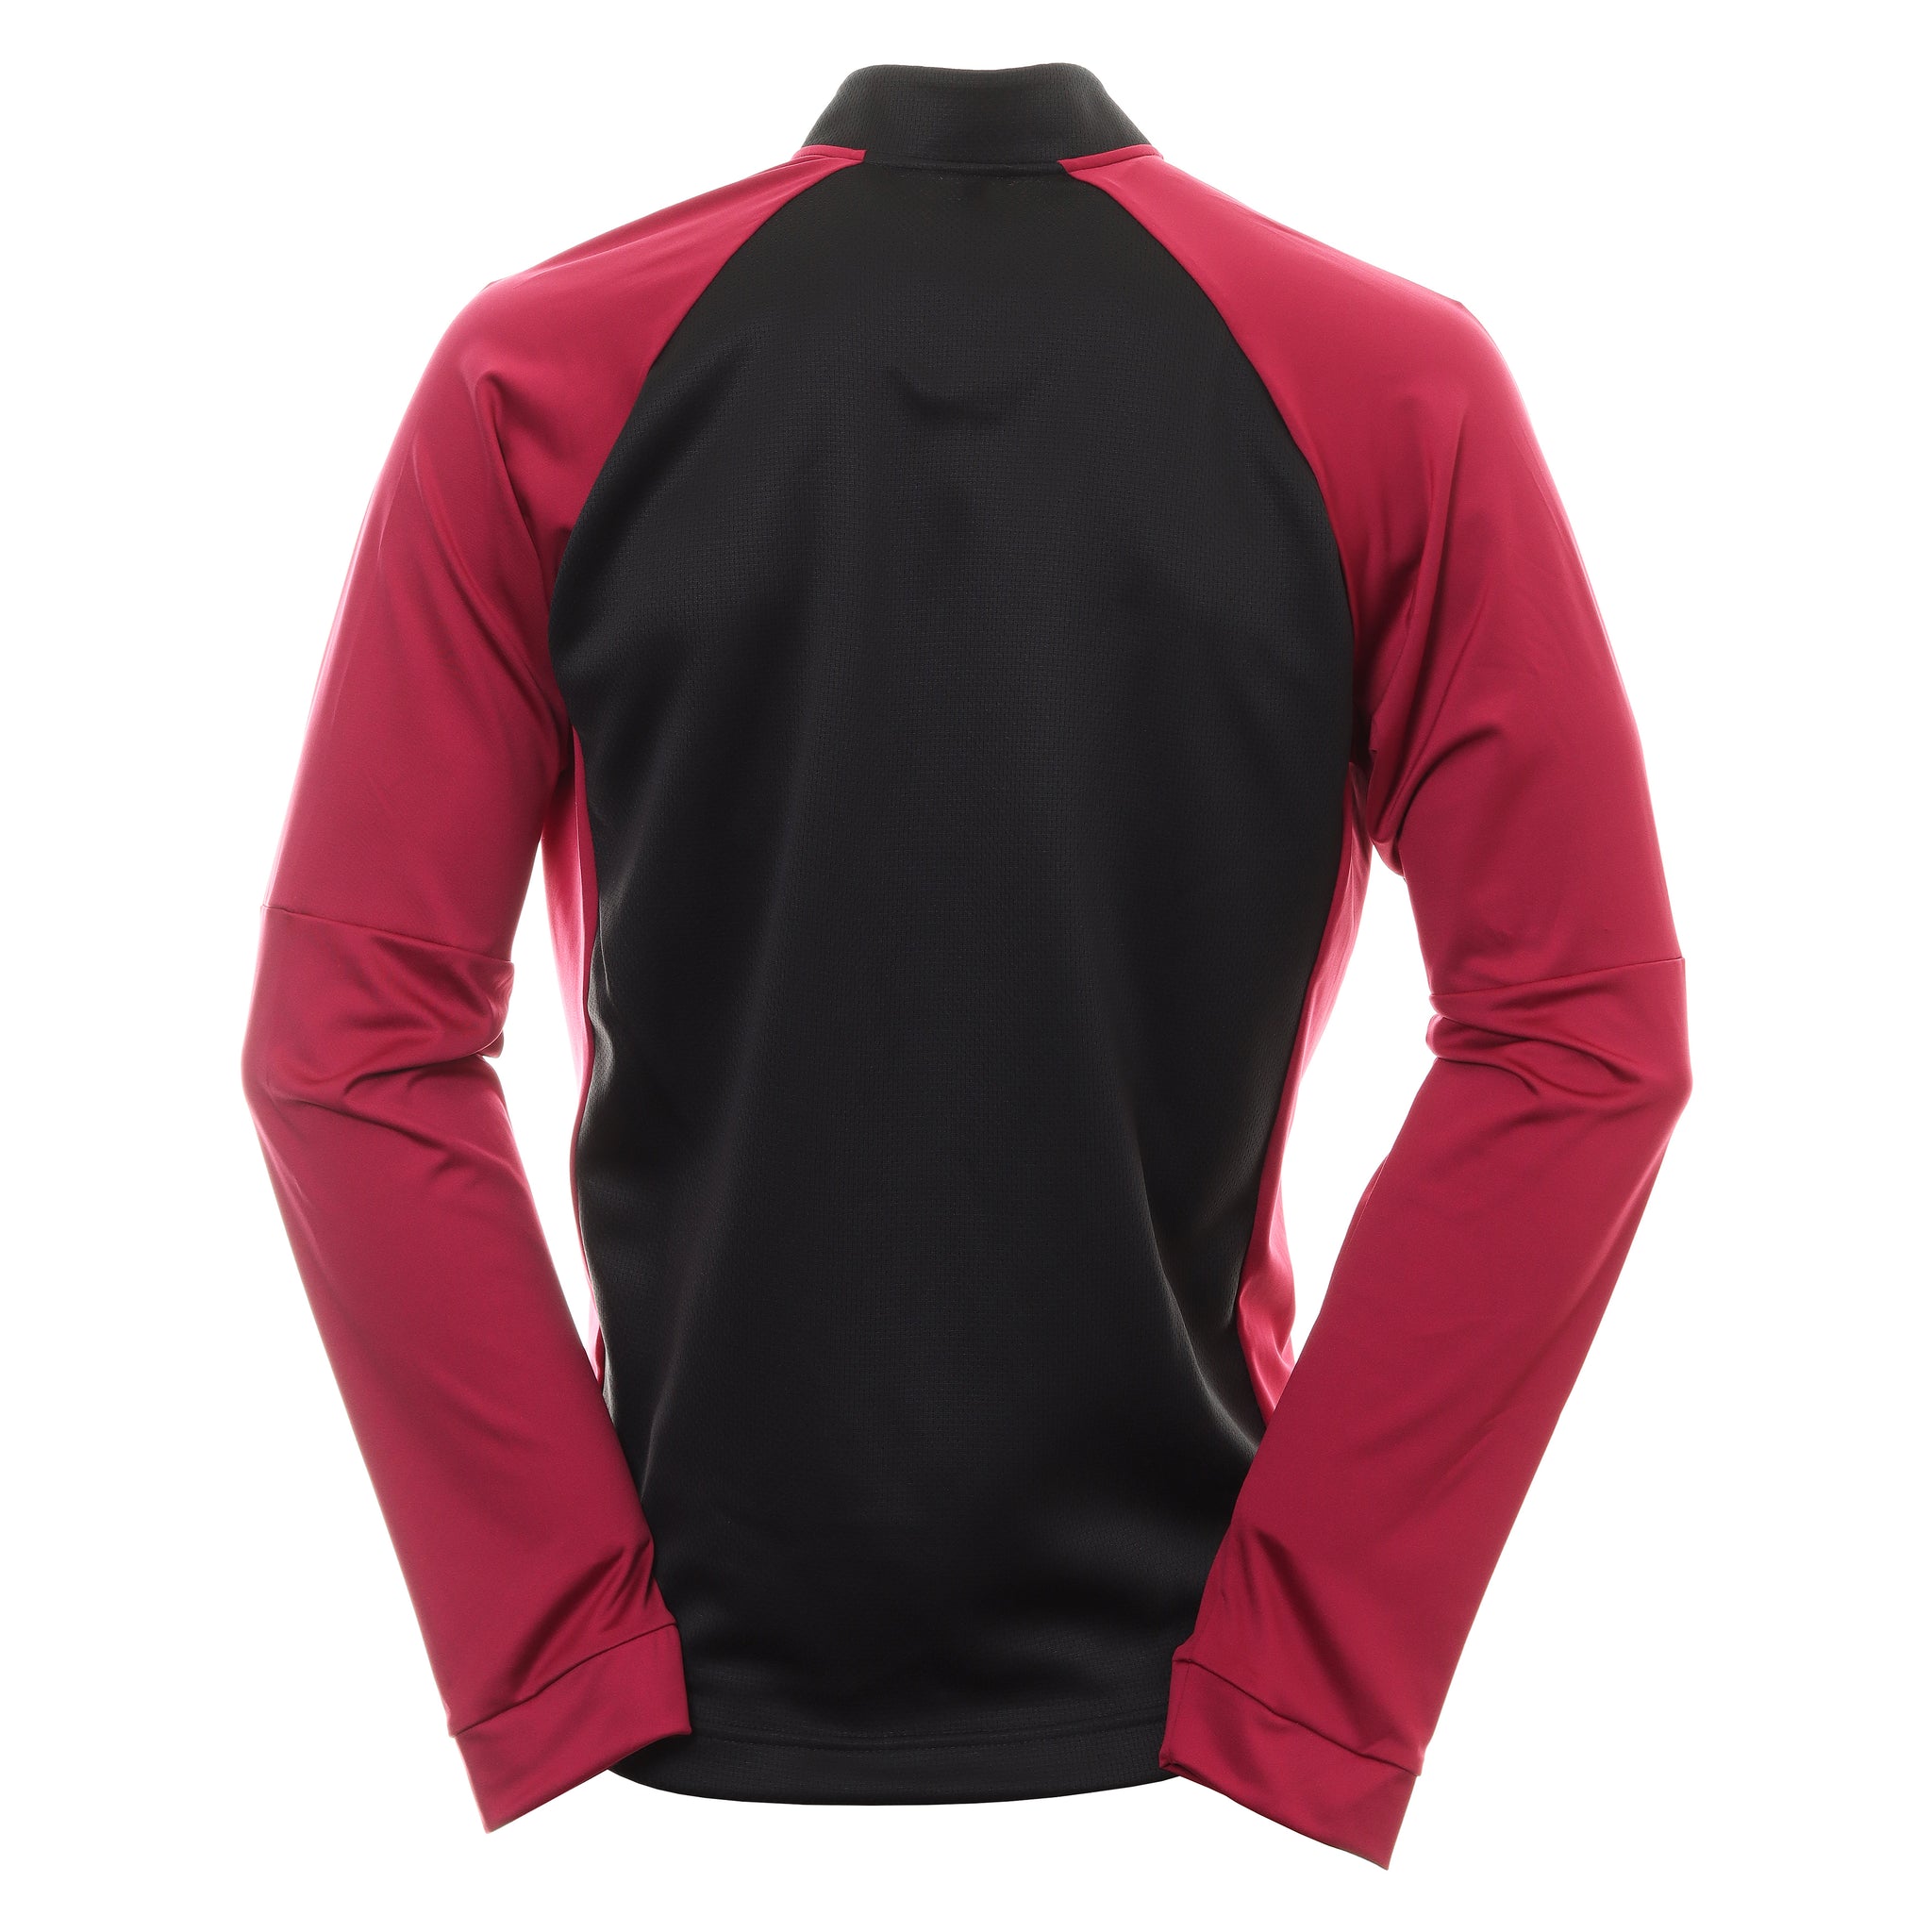 adidas-golf-colour-block-1-4-zip-he5451-black-legacy-burgundy